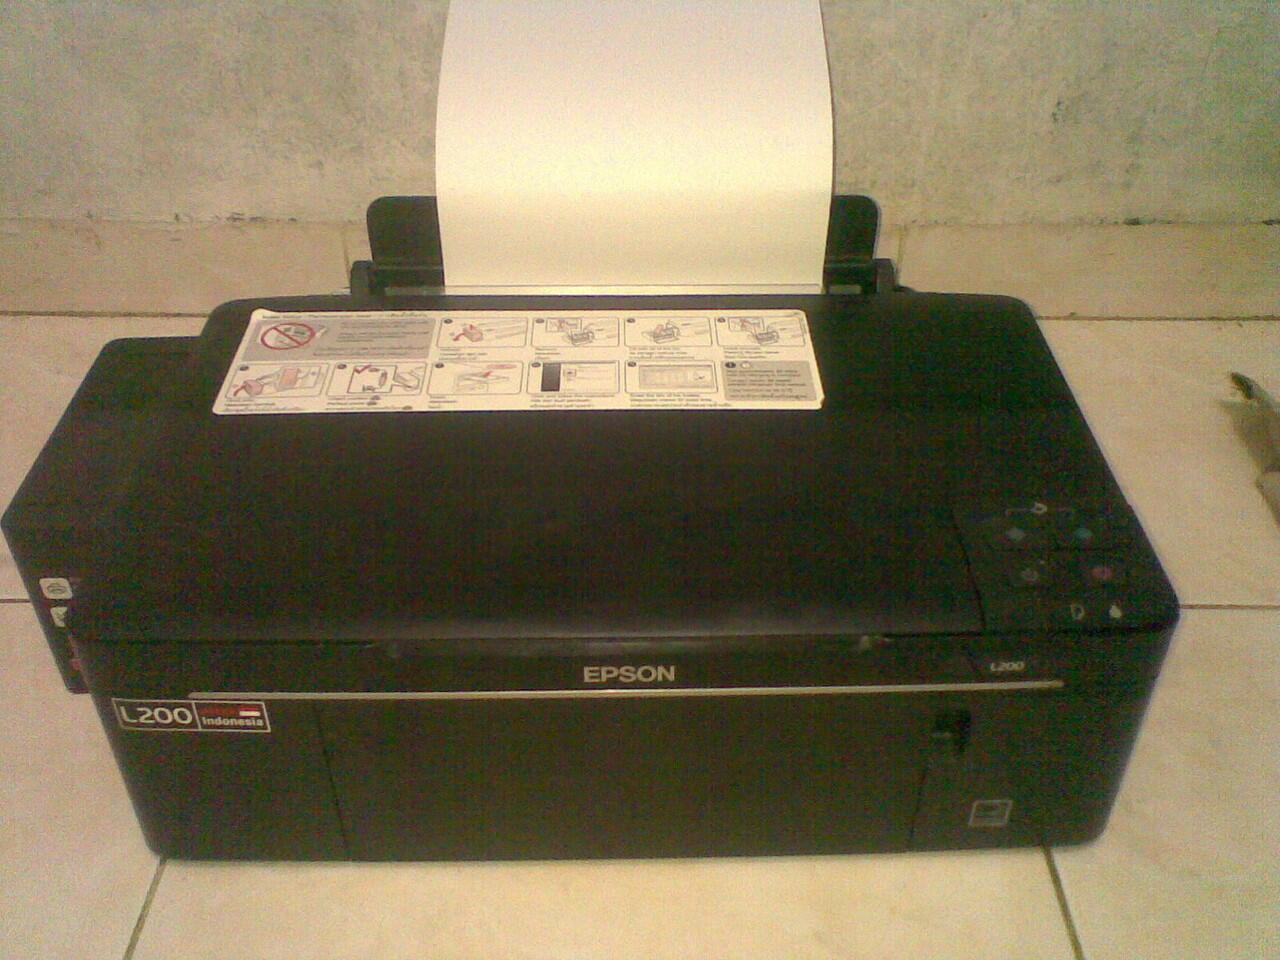 Terjual Printer Epson L200 Printscancopyall In One Printer Dgn Infus Resmi Dari Epson Kaskus 9711